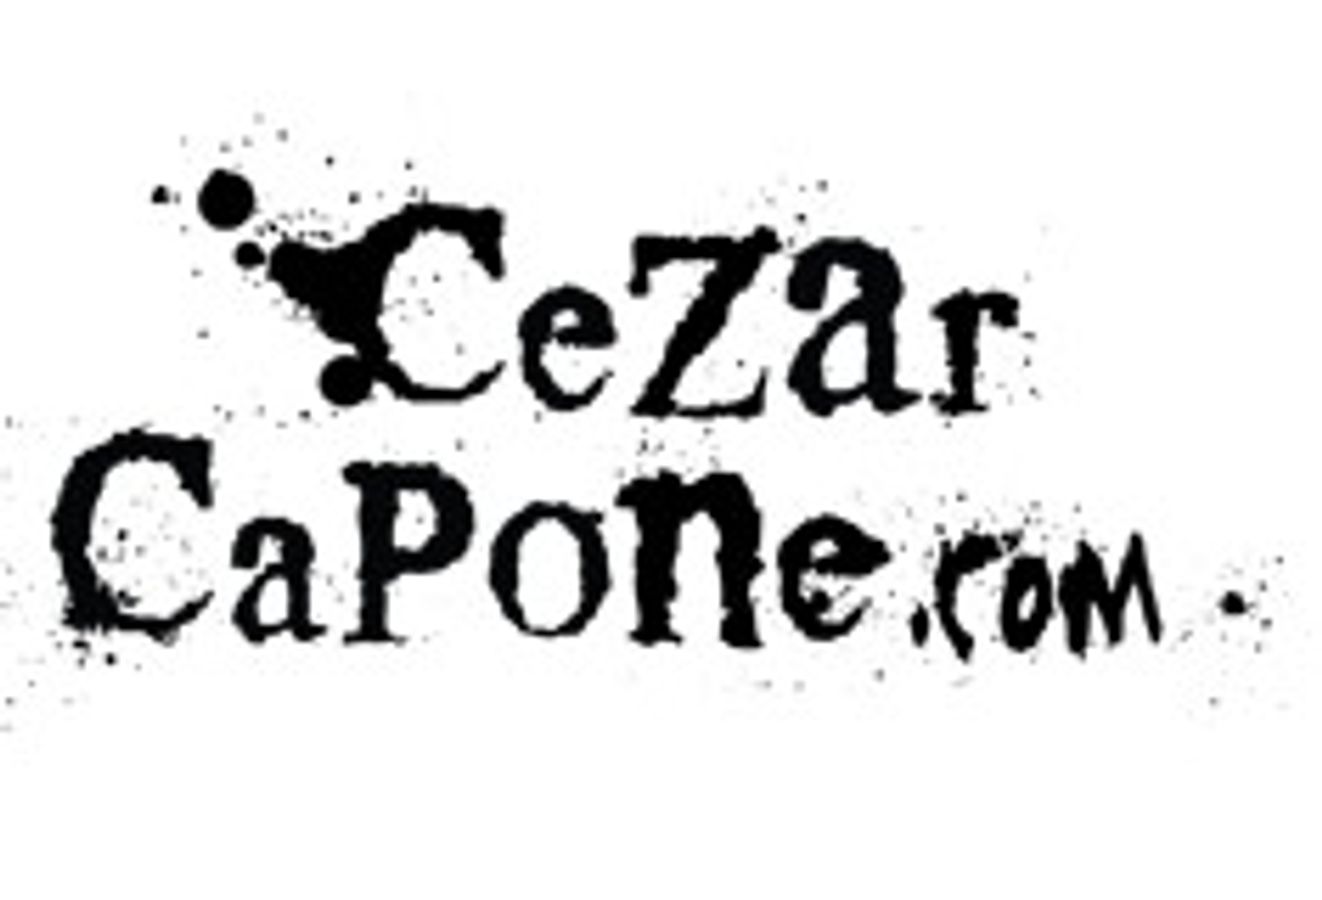 Cezar Capone